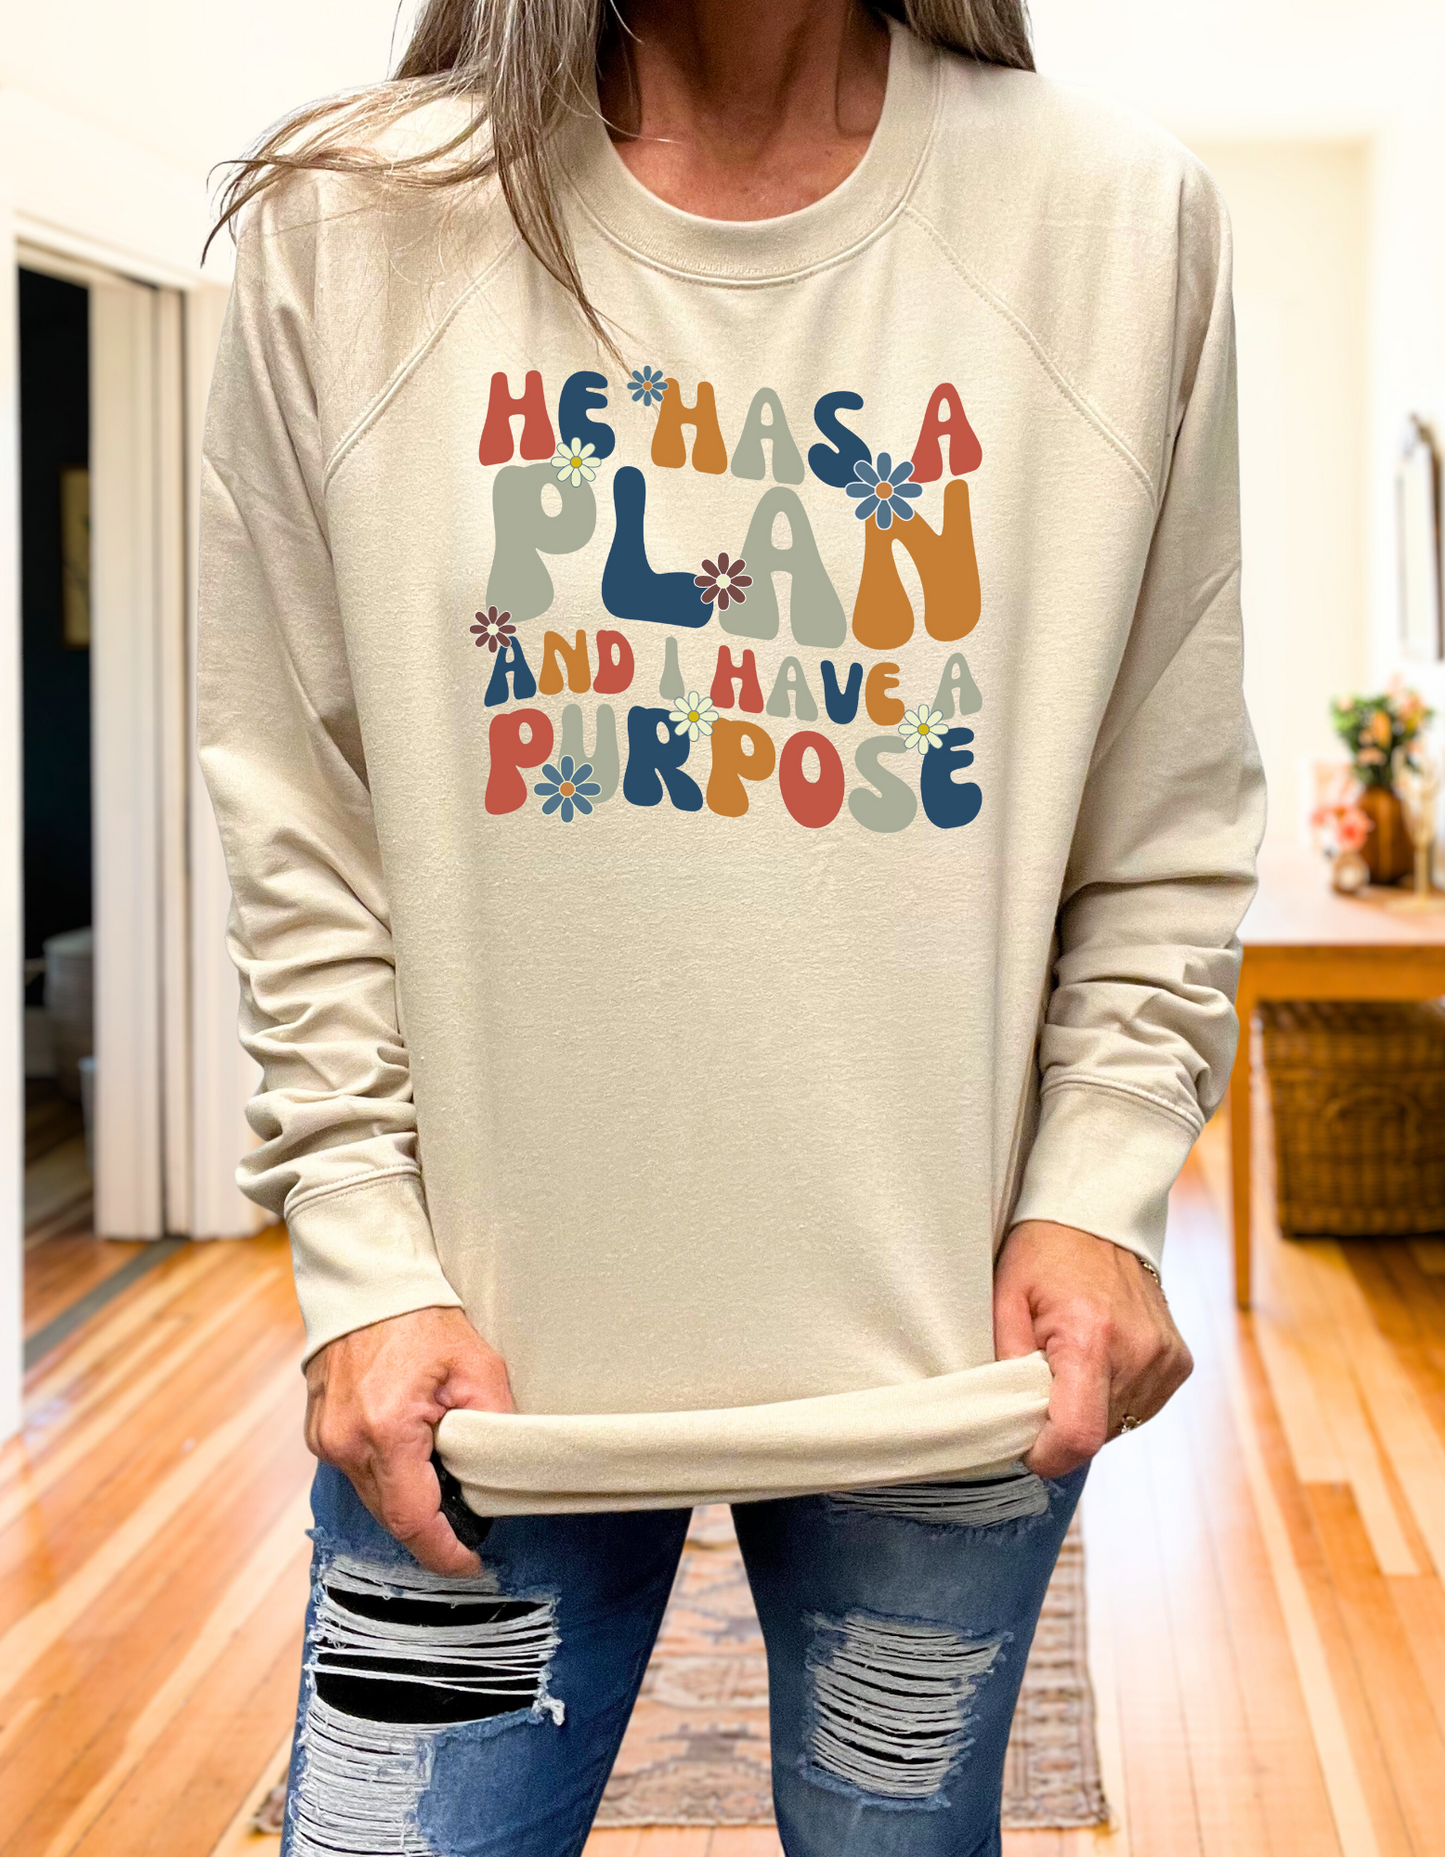 His Plan, My Purpose sweatshirt